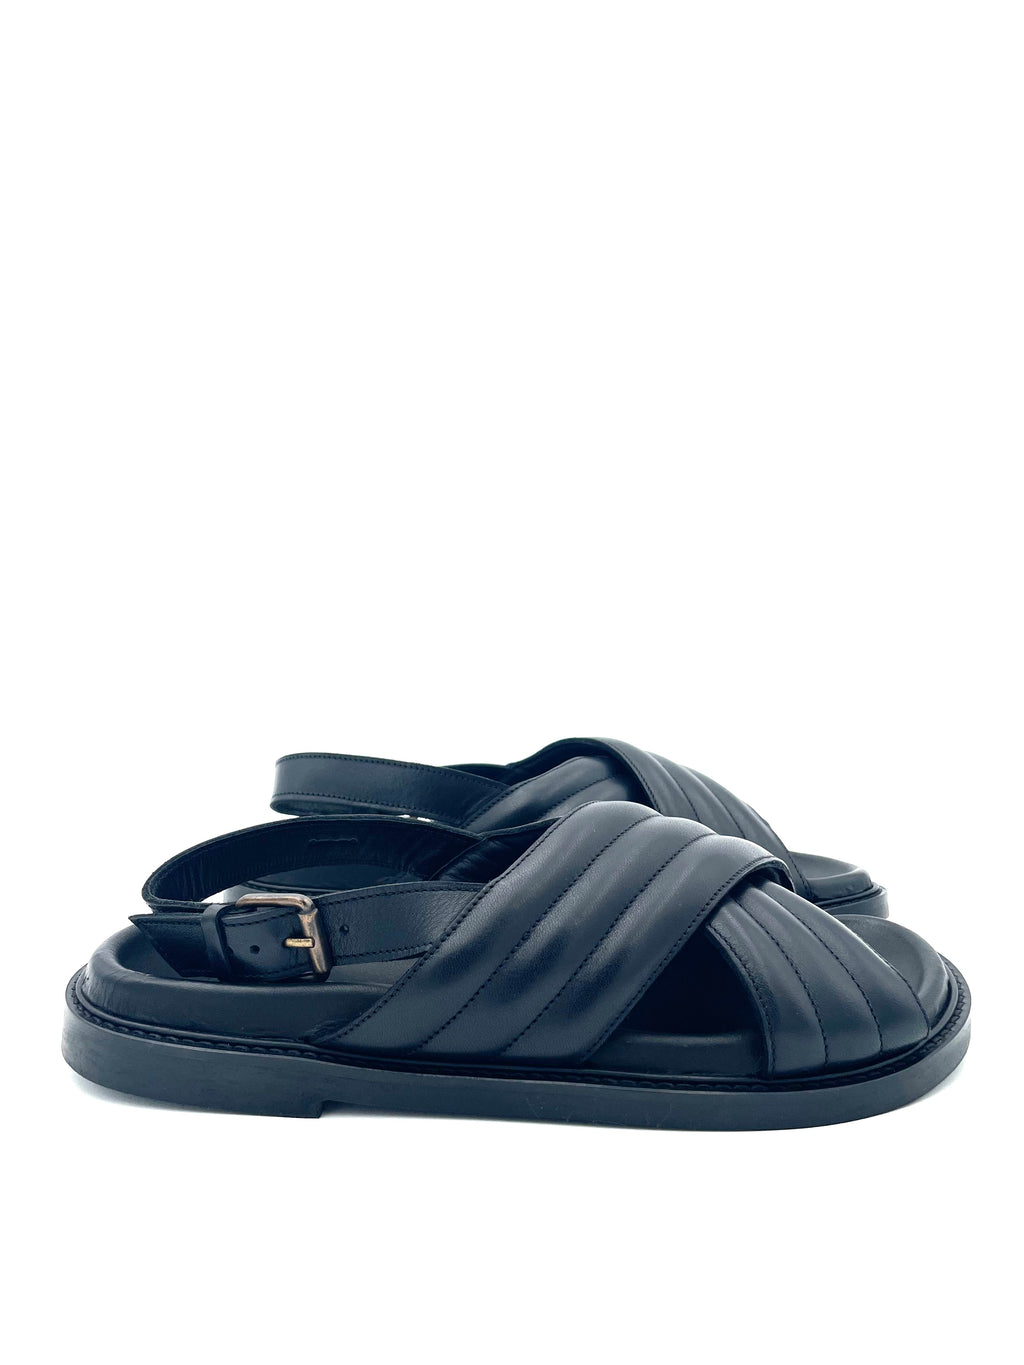 Anthology Paris Women's Black Flat Crisscross Sandal with Molded Footbed 